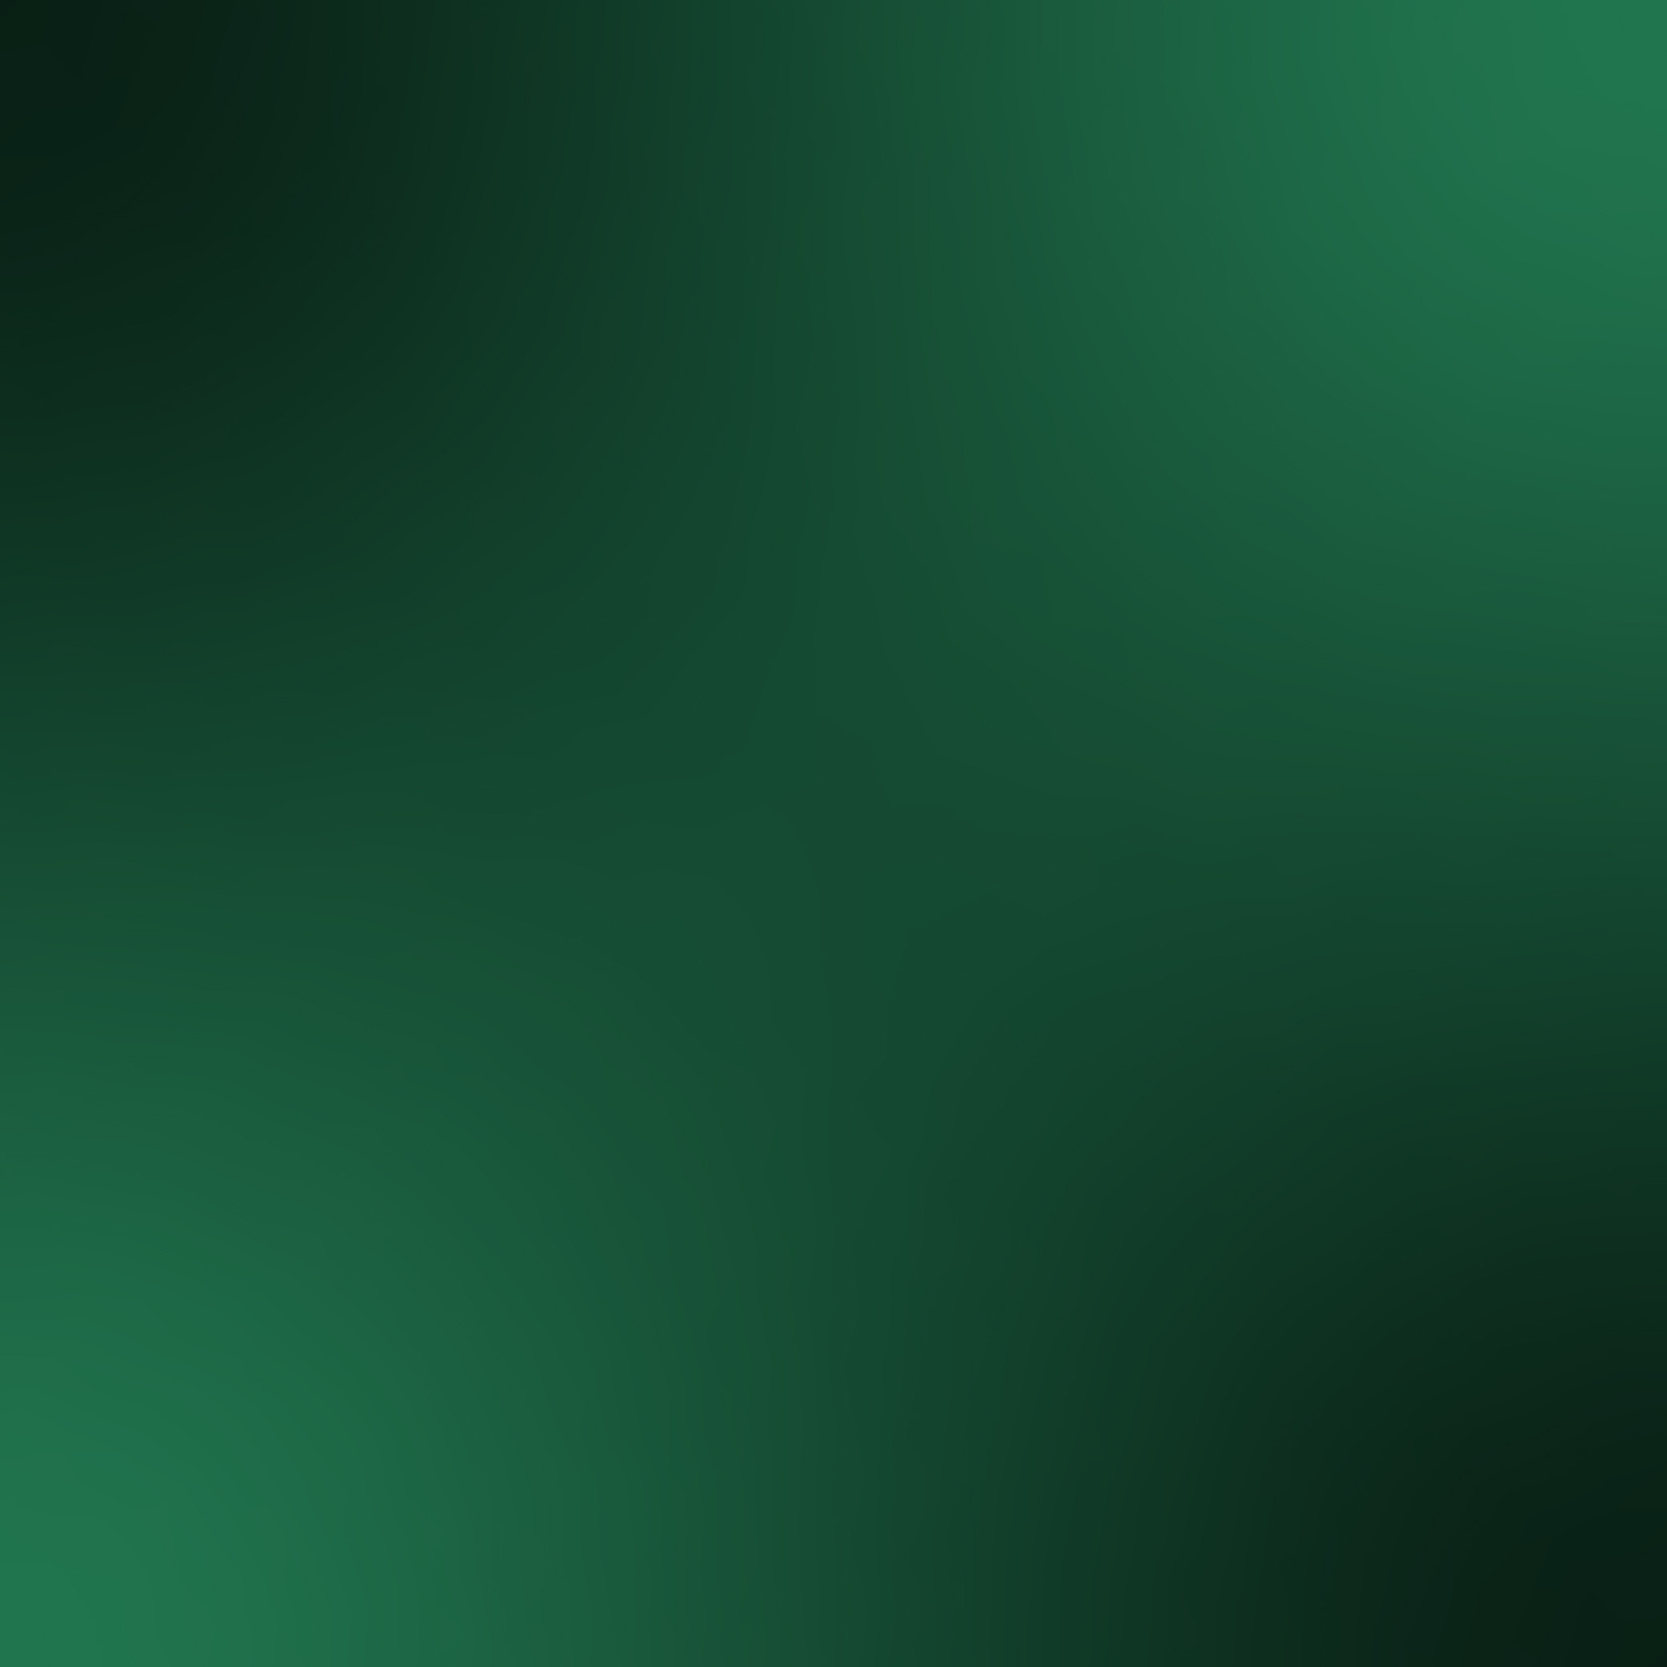 square jade green - deep green gradient background